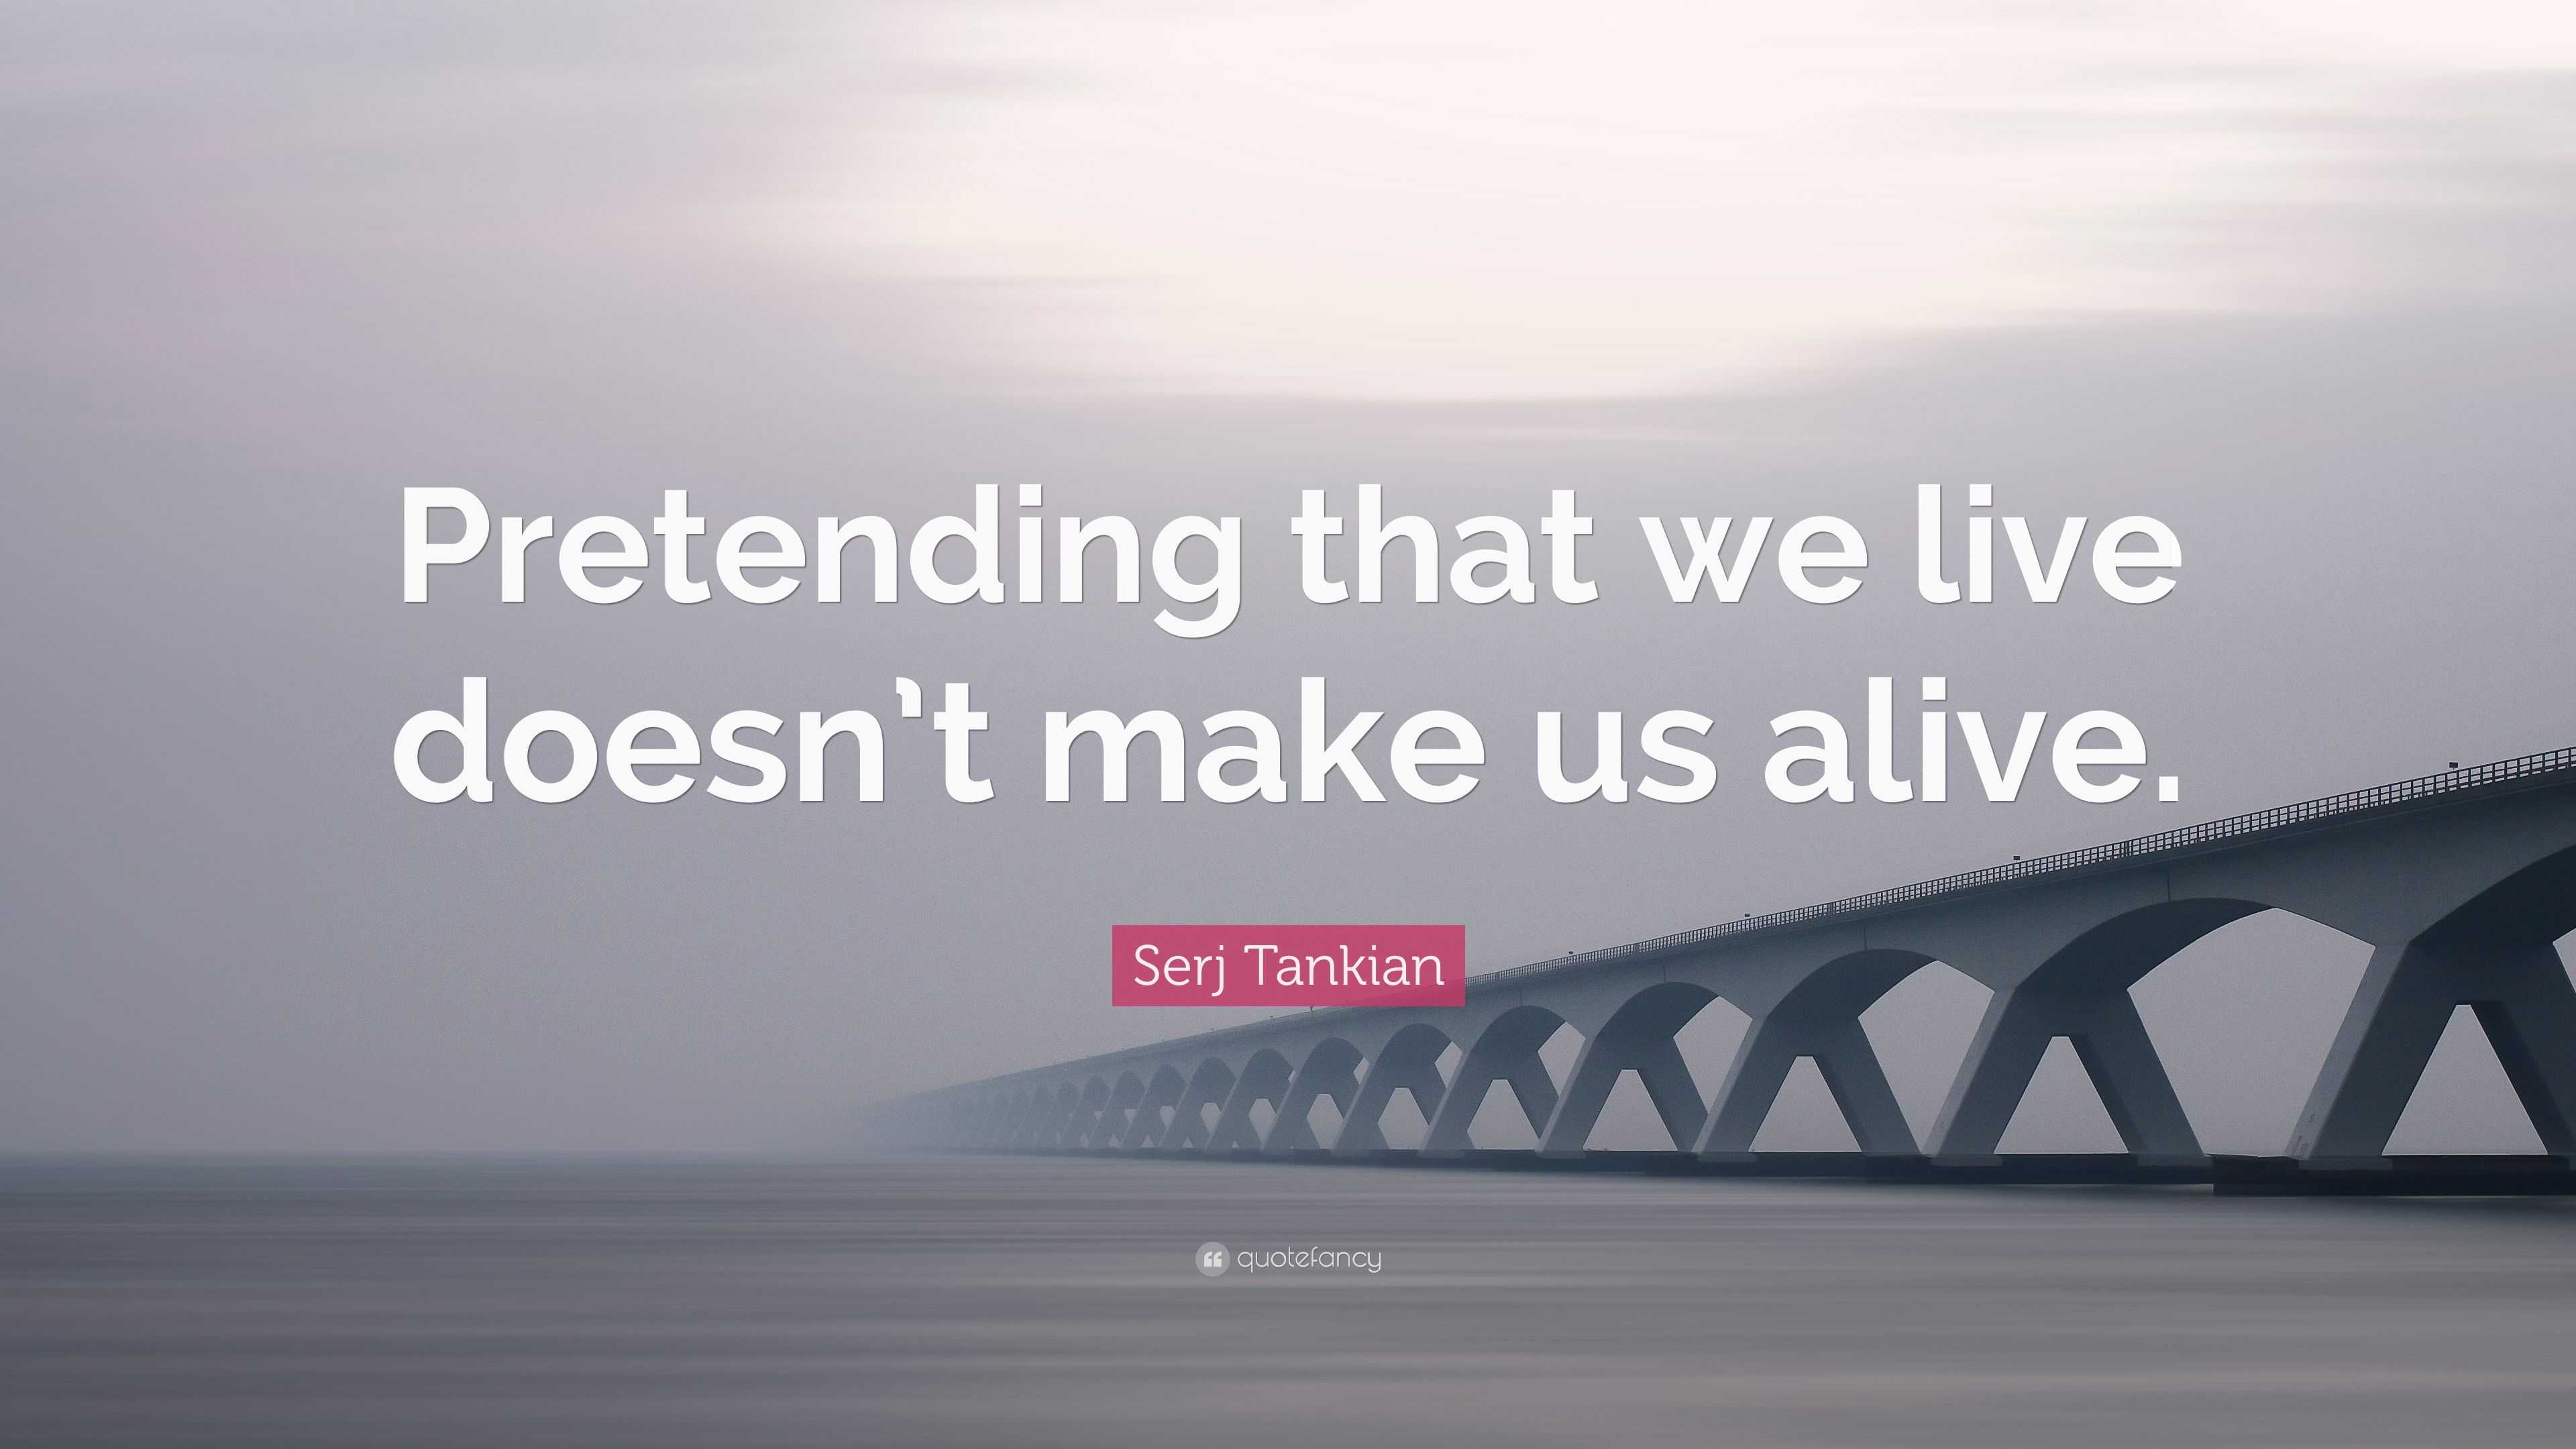 Serj Tankian - Pretending that we live doesn't make us alive